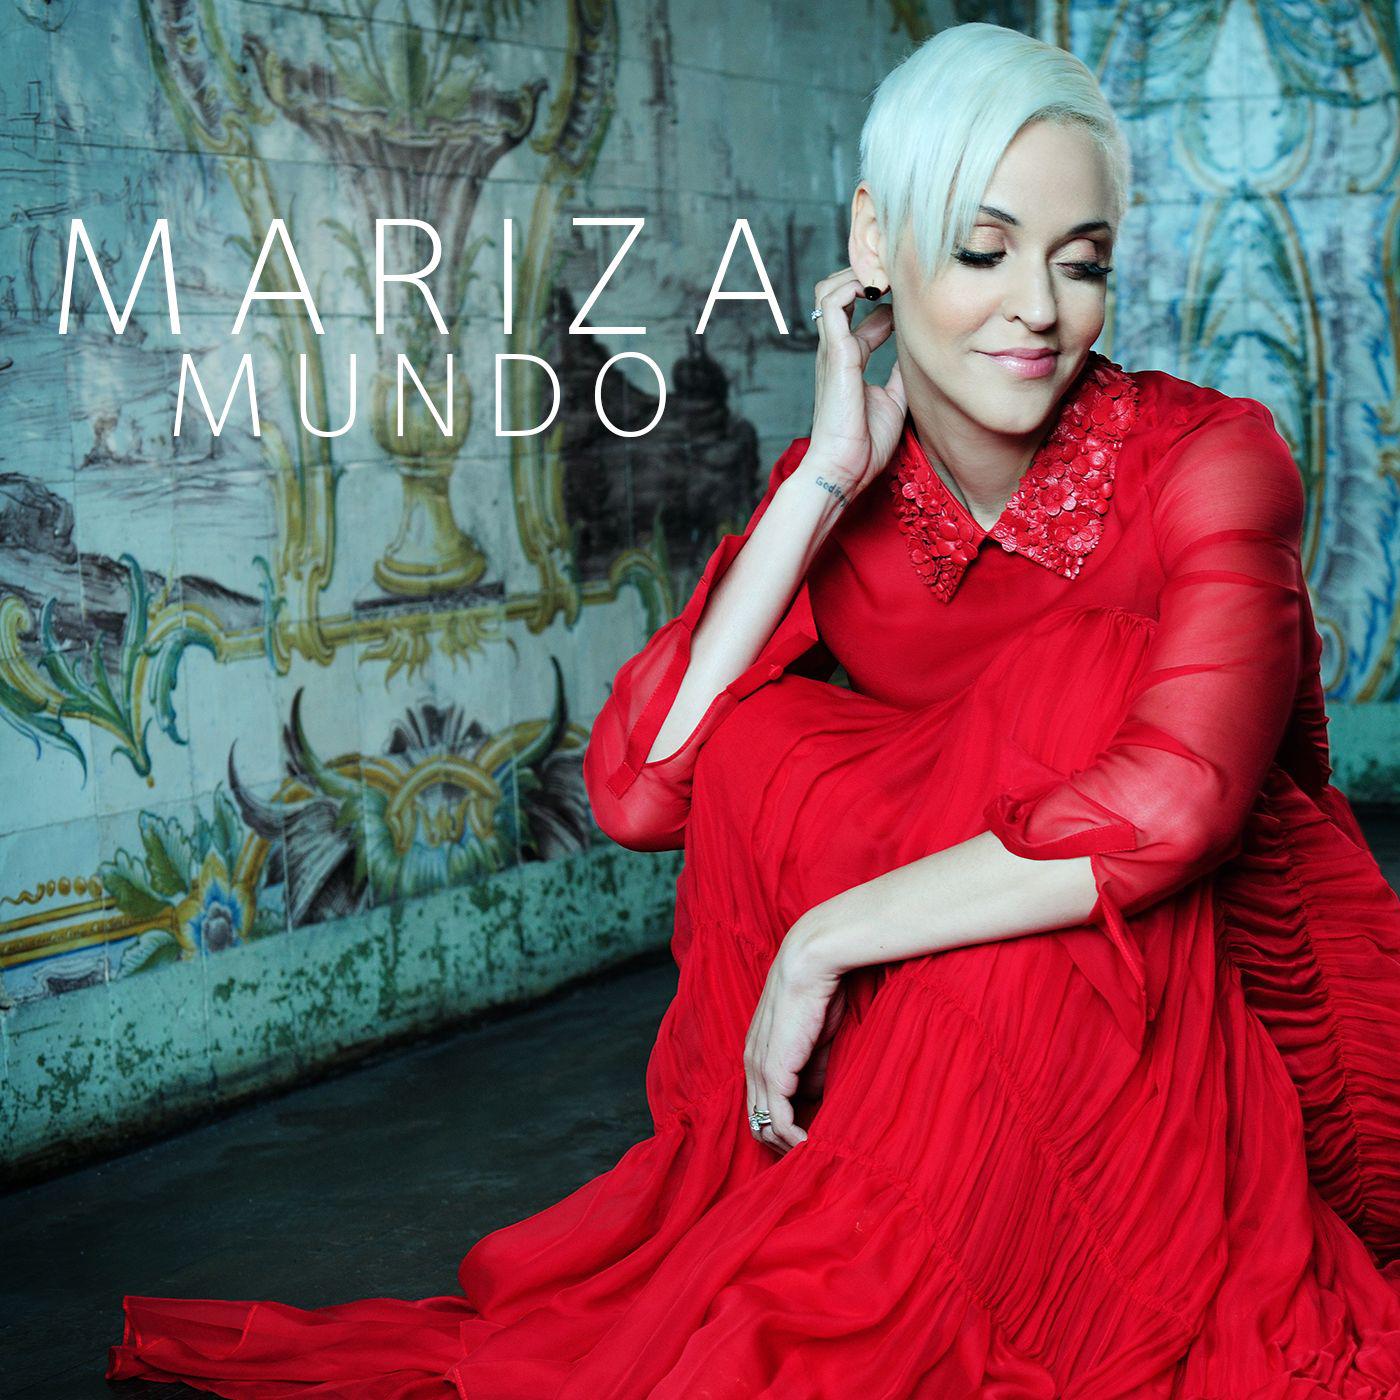 Mariza fado(葡萄牙民歌) - 歌单 - 网易云音乐